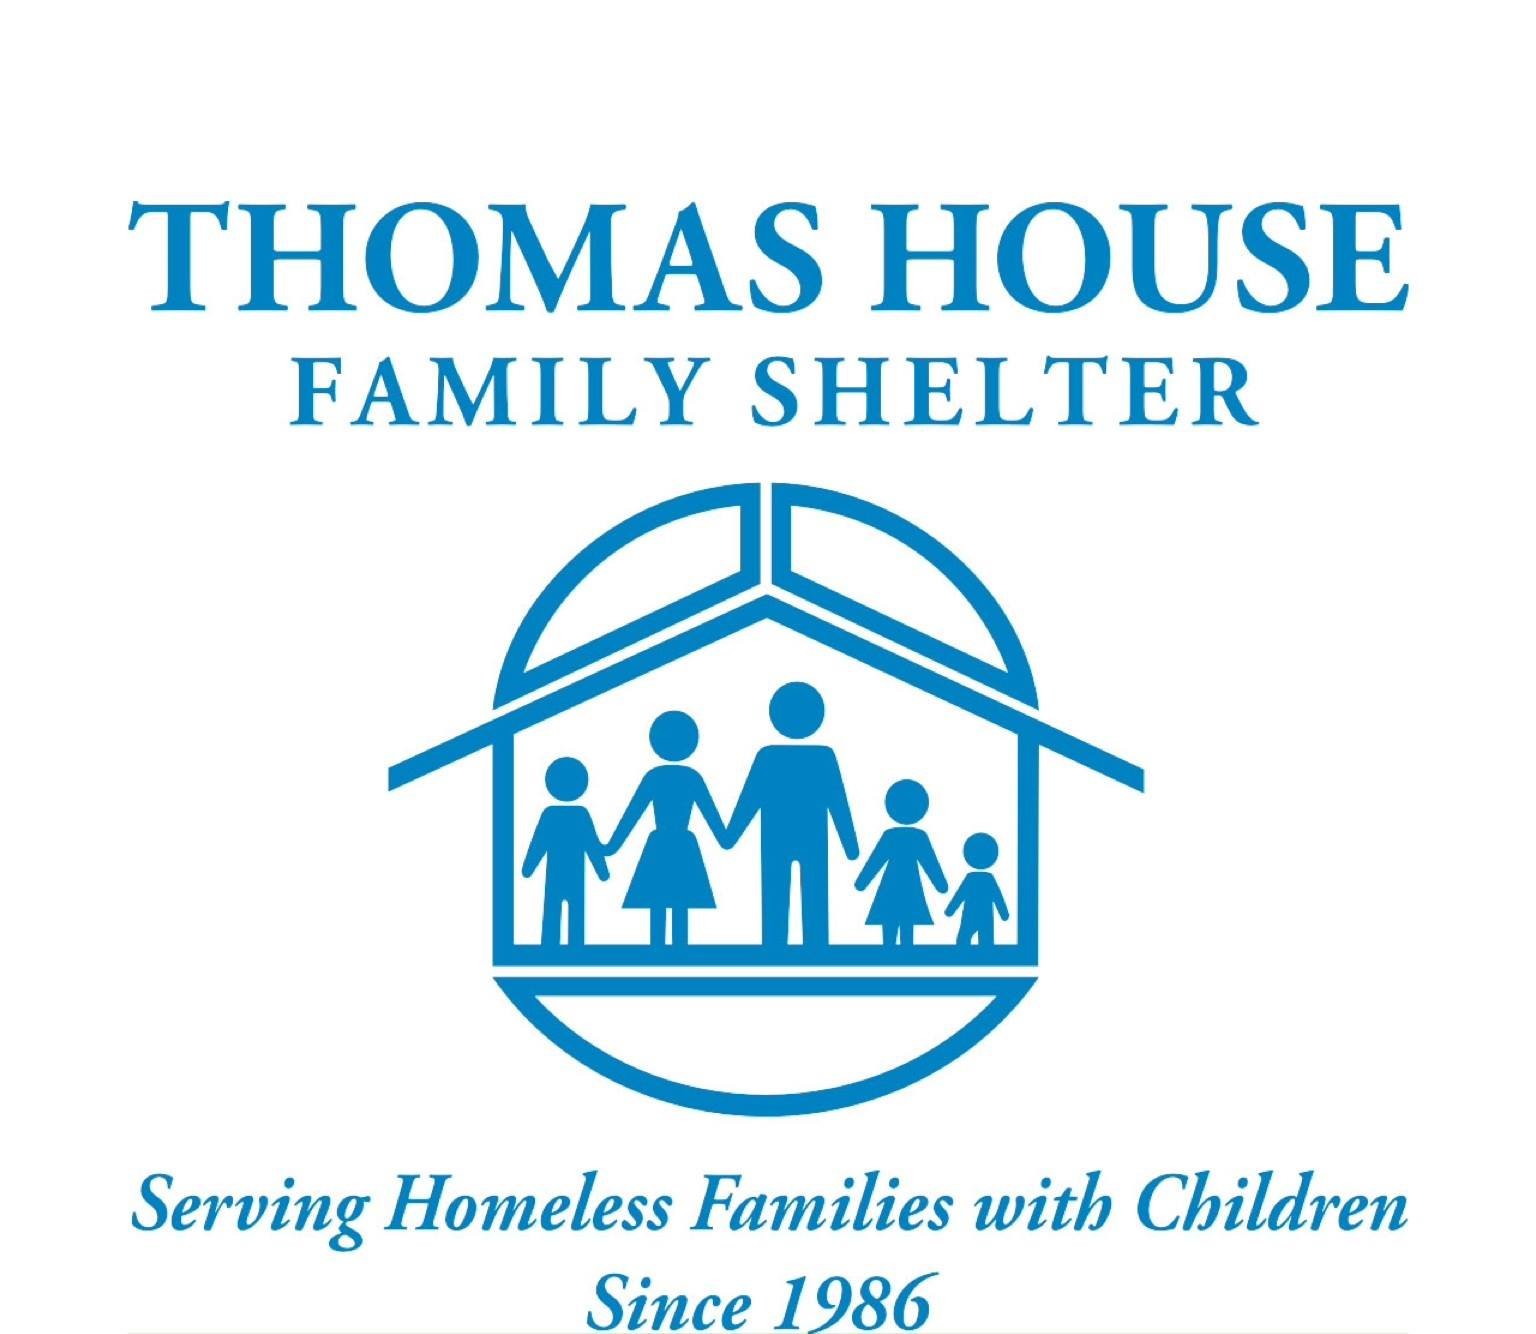 Thomas House Family Shelter Logo.jpg